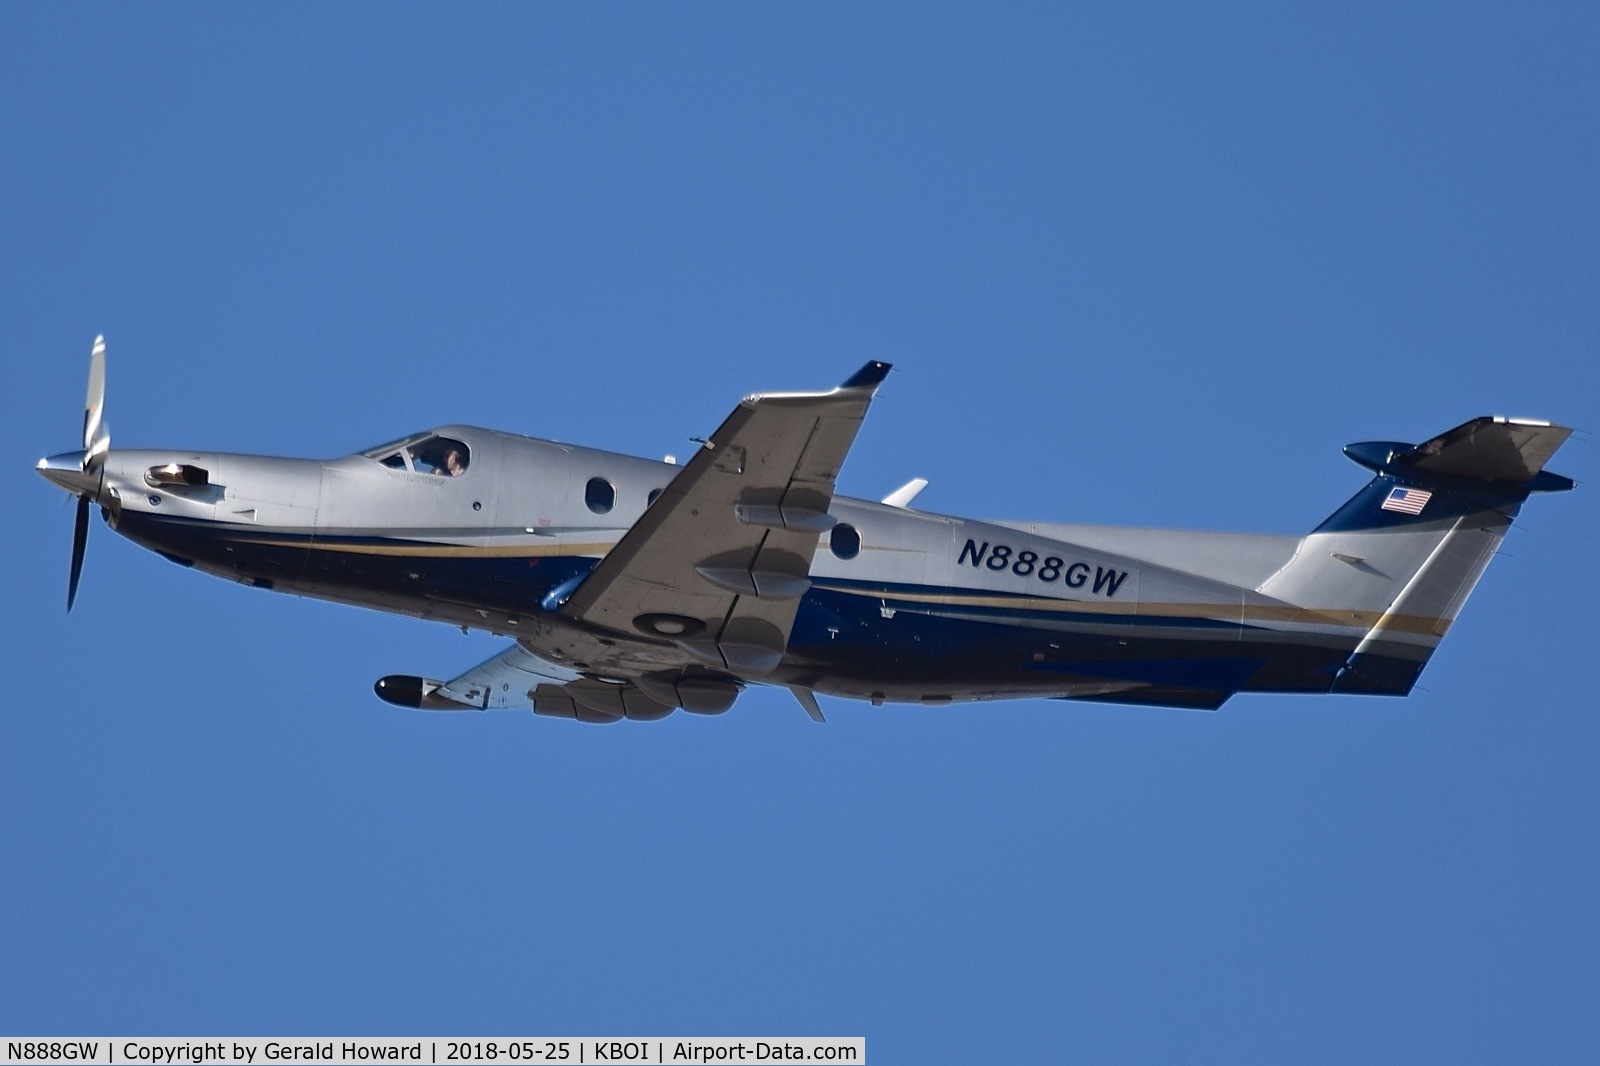 N888GW, 2001 Pilatus PC-12/45 C/N 421, Departing RWY 10R.